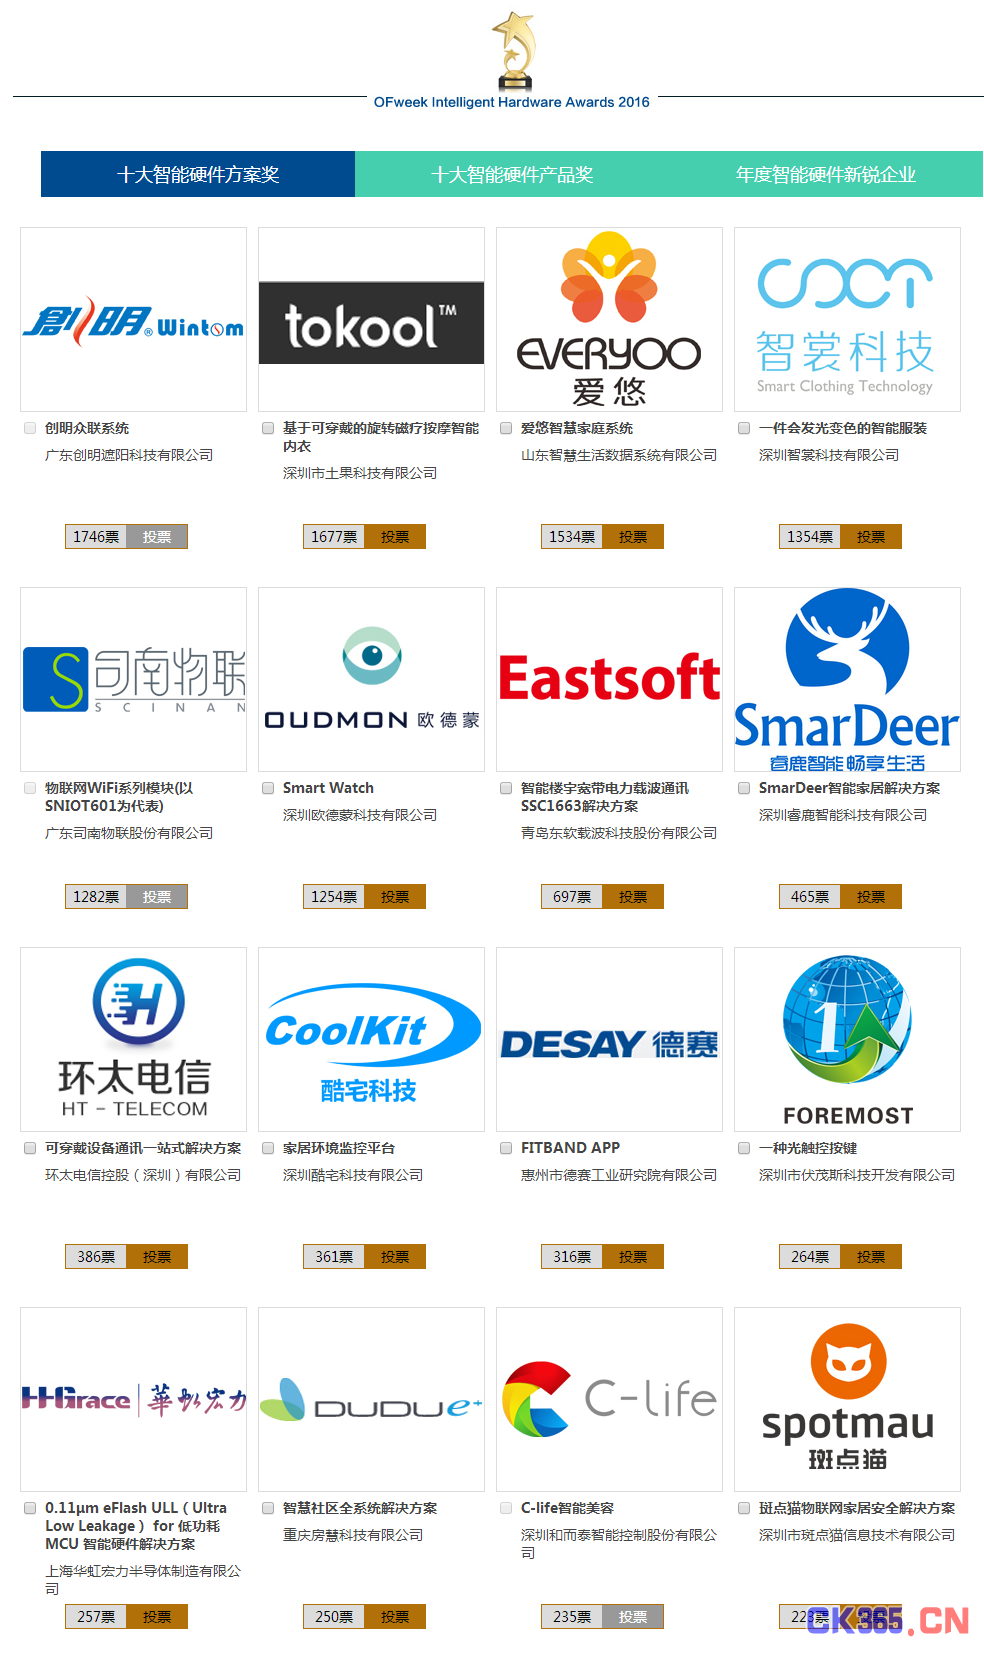 OFweek 2016中国智能硬件行业年度评选火热投票中